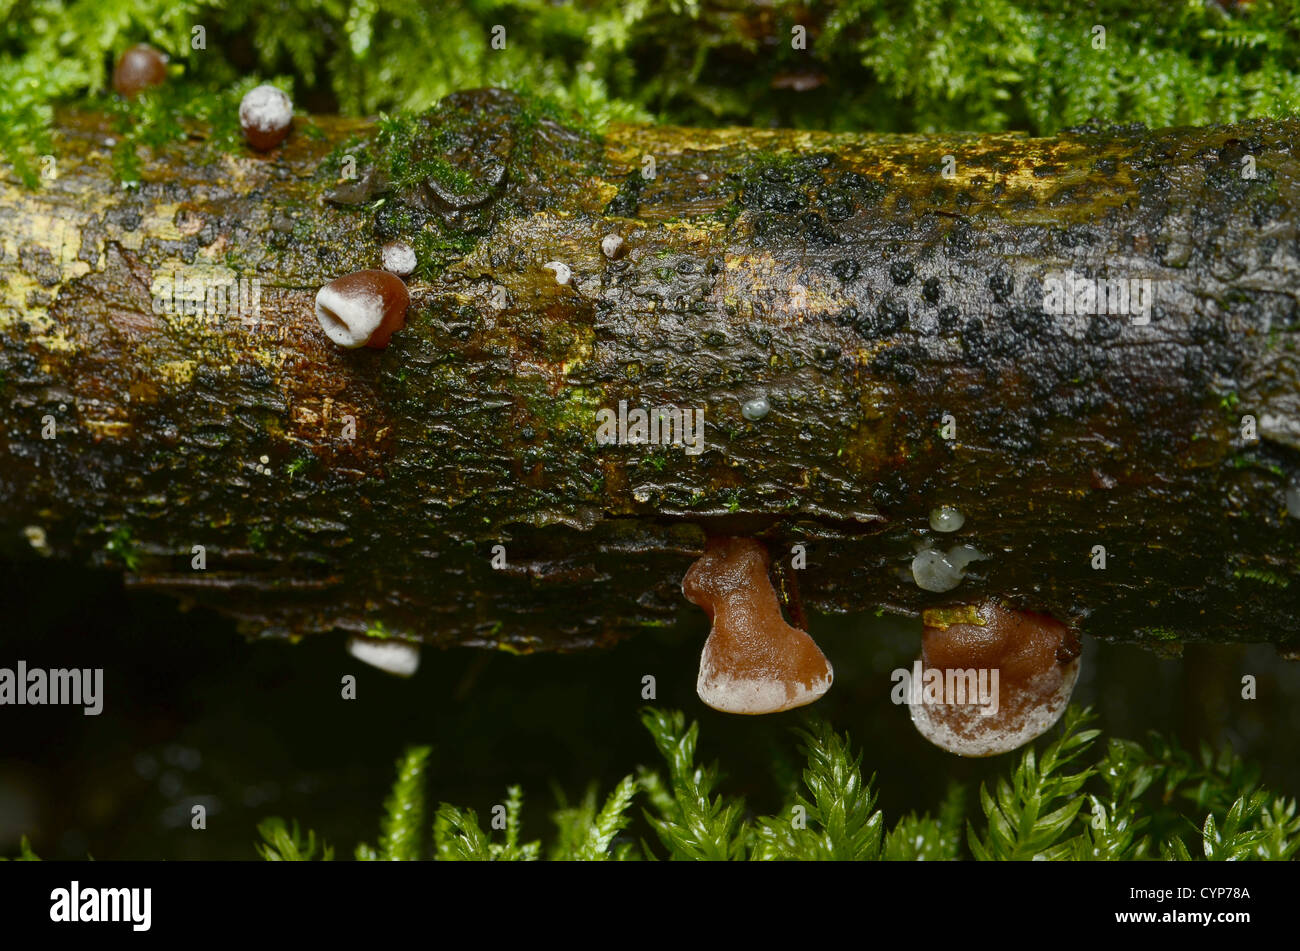 Fungi growing on log Stock Photo